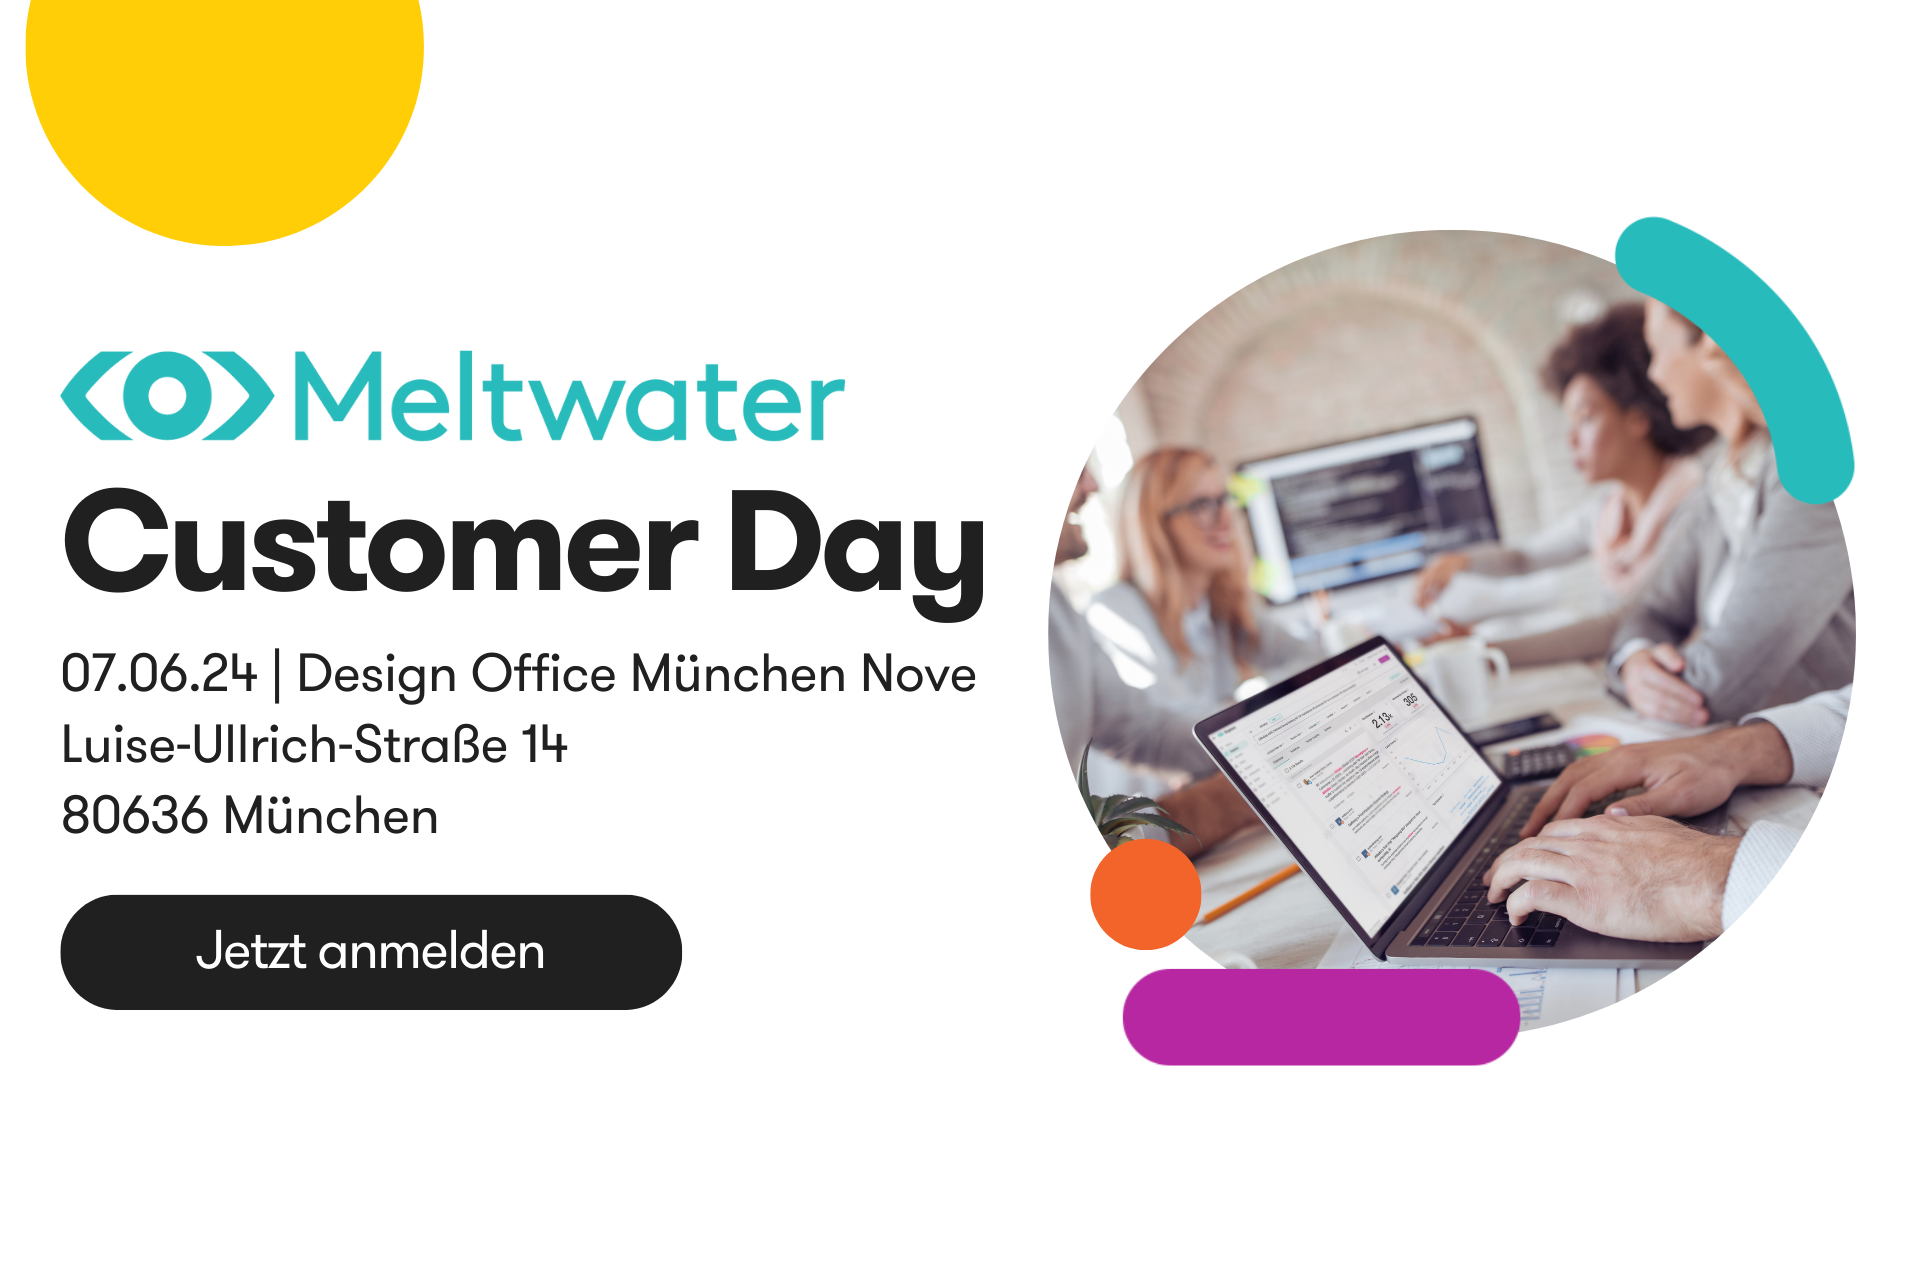 Meltwater Customer Day am 07.06.24 in München